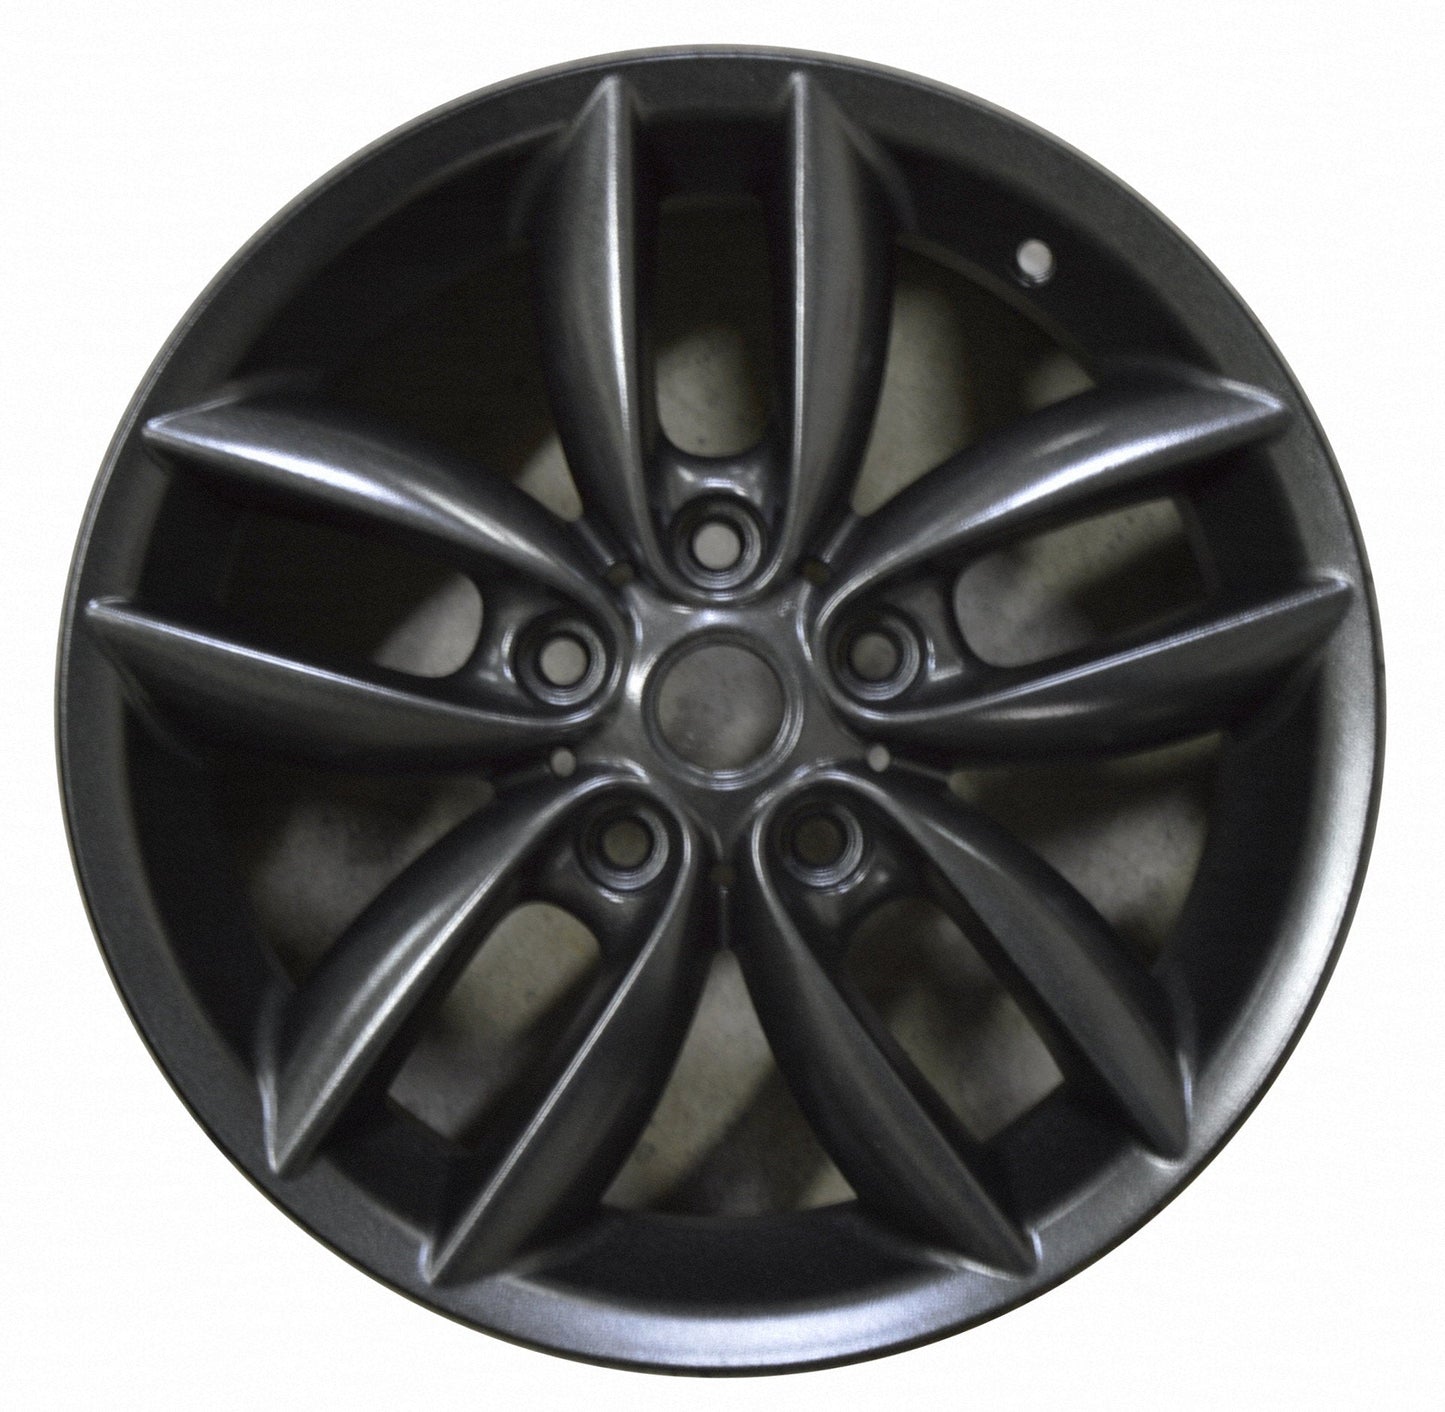 MINI Paceman  2013, 2014 Factory OEM Car Wheel Size 19x7.5 Alloy WAO.71481.LC160.FFC7